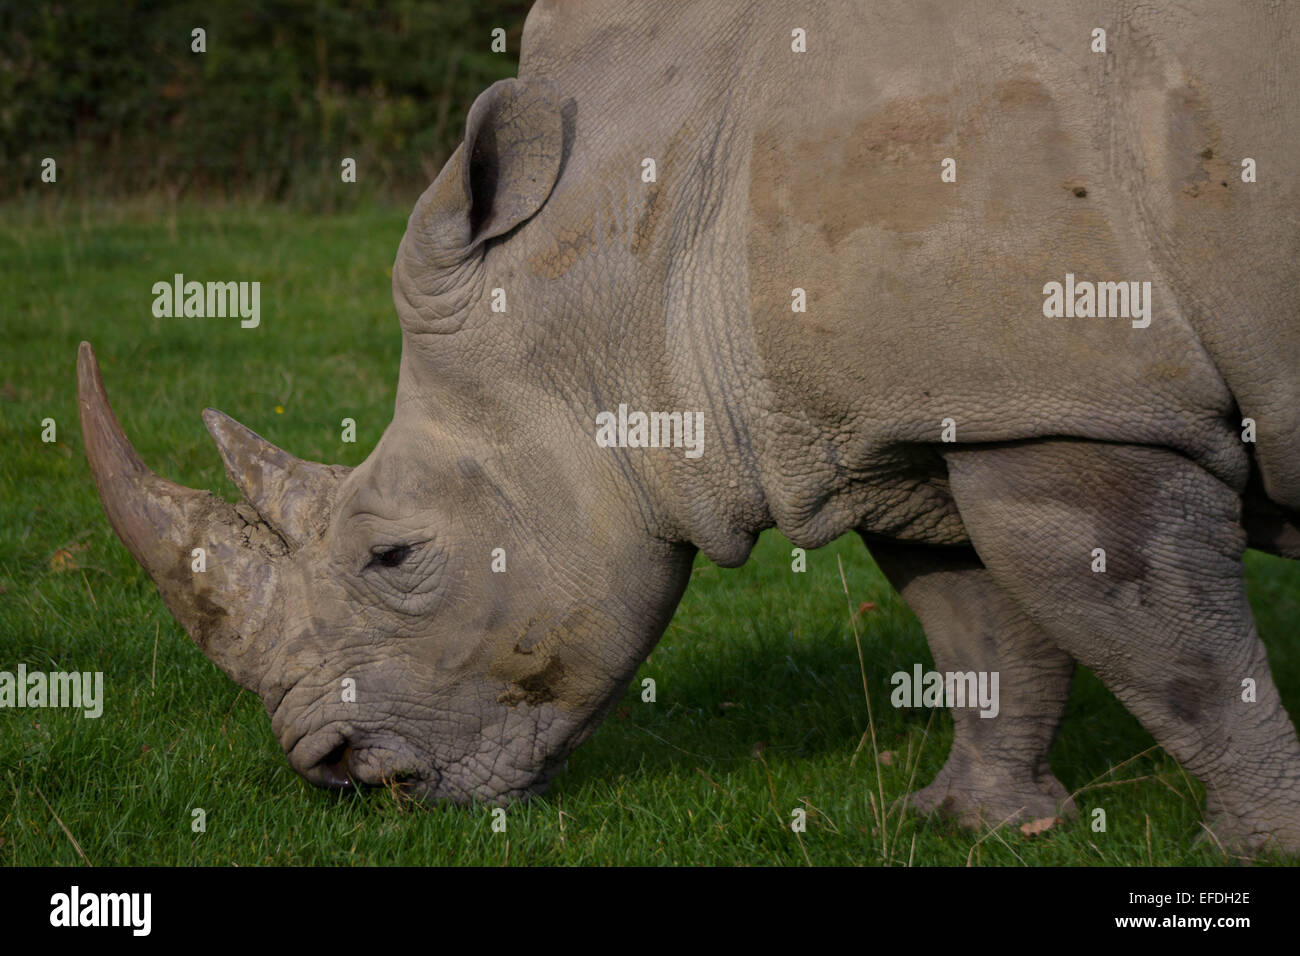 Rhinoceros, rhino, Rhinocerotidae, grazing on green grass. Stock Photo